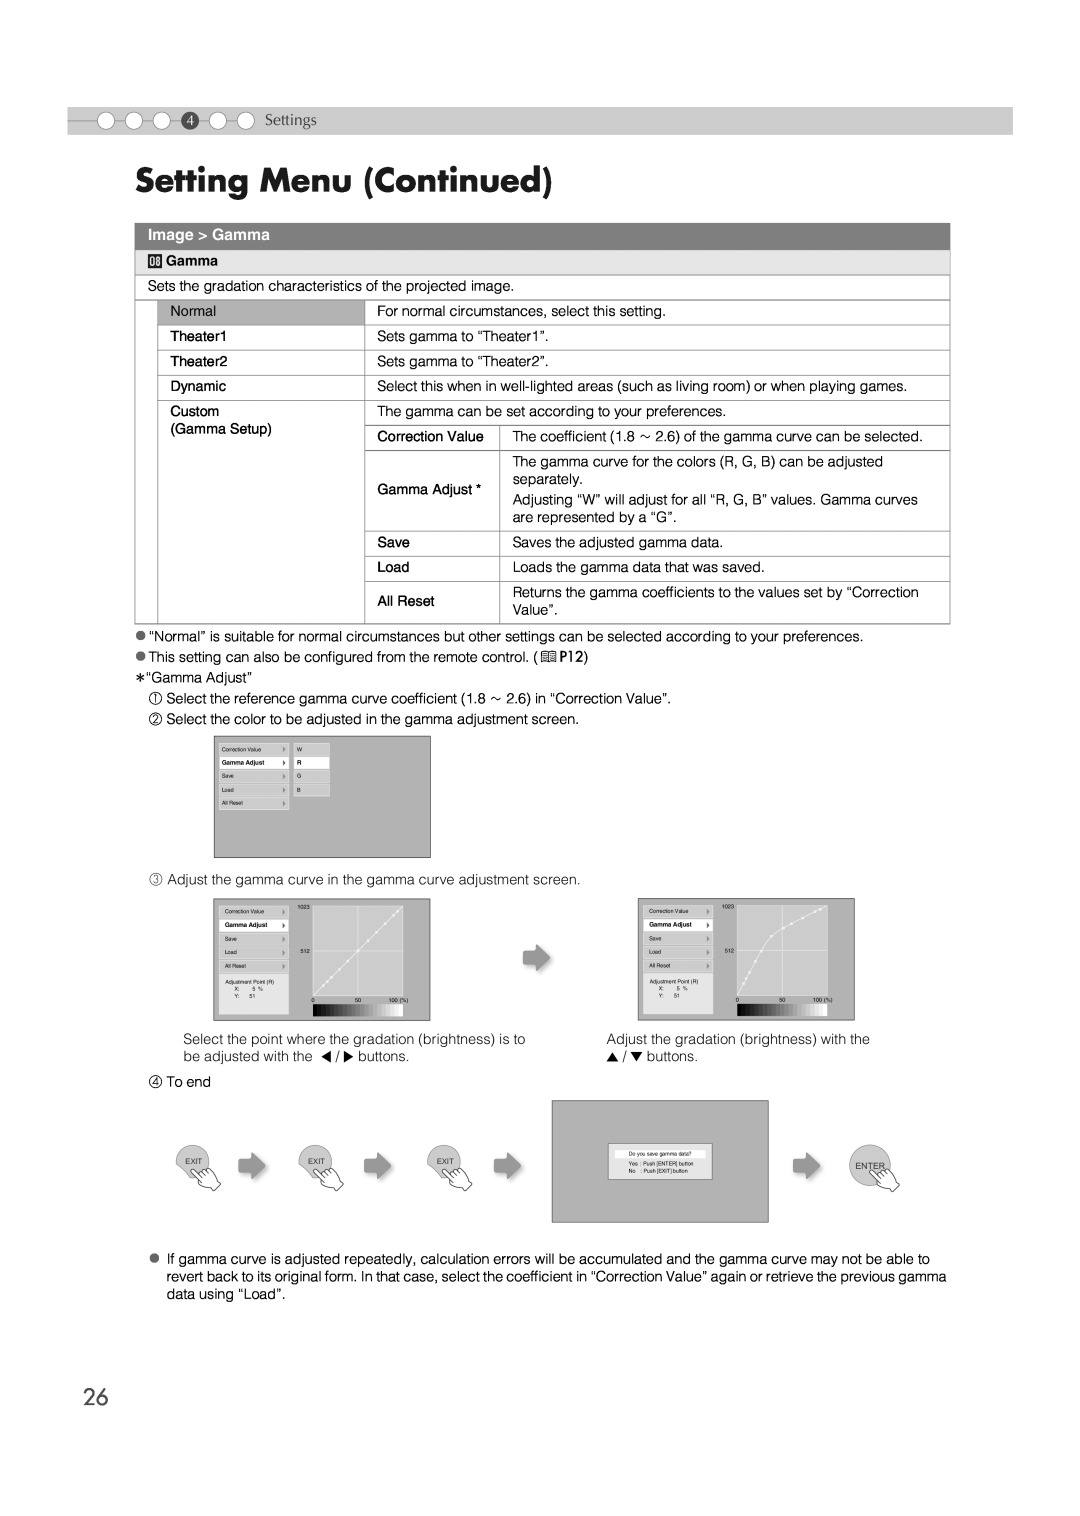 JVC DLA-RS2 manual Setting Menu Continued, Settings, Image Gamma, H Gamma 